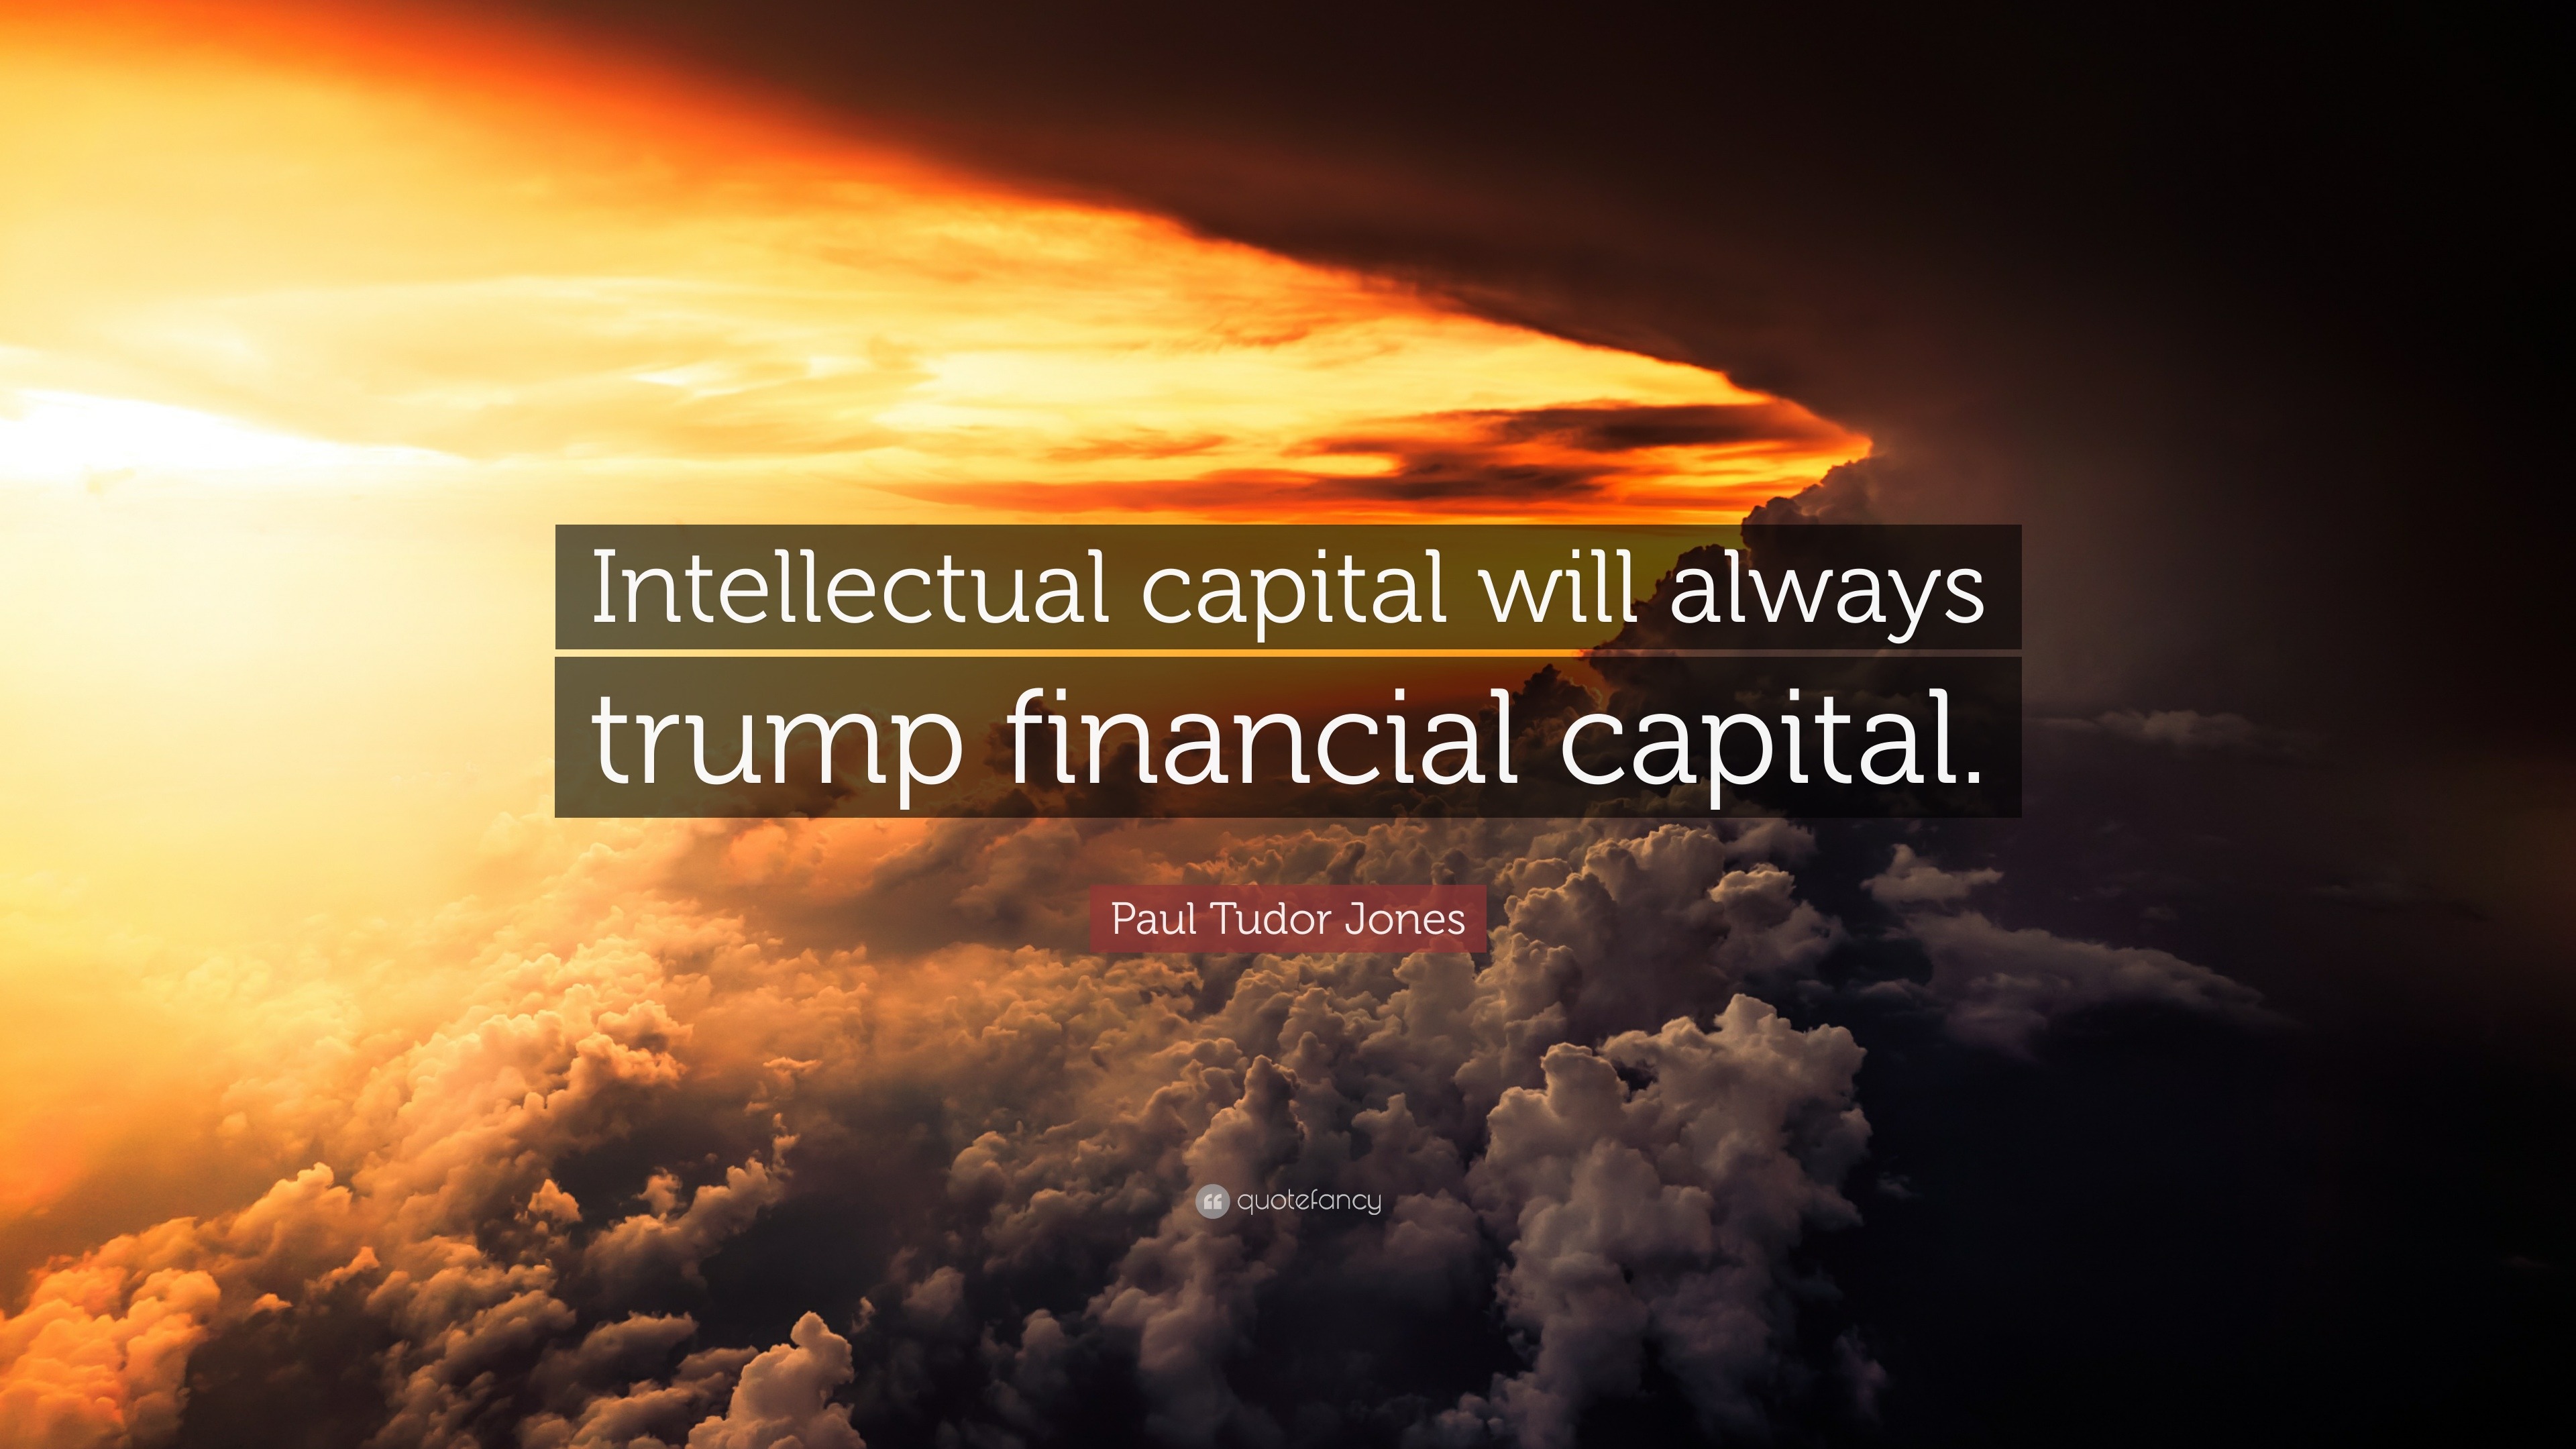 Paul Tudor Jones Quote: "Intellectual capital will always ...